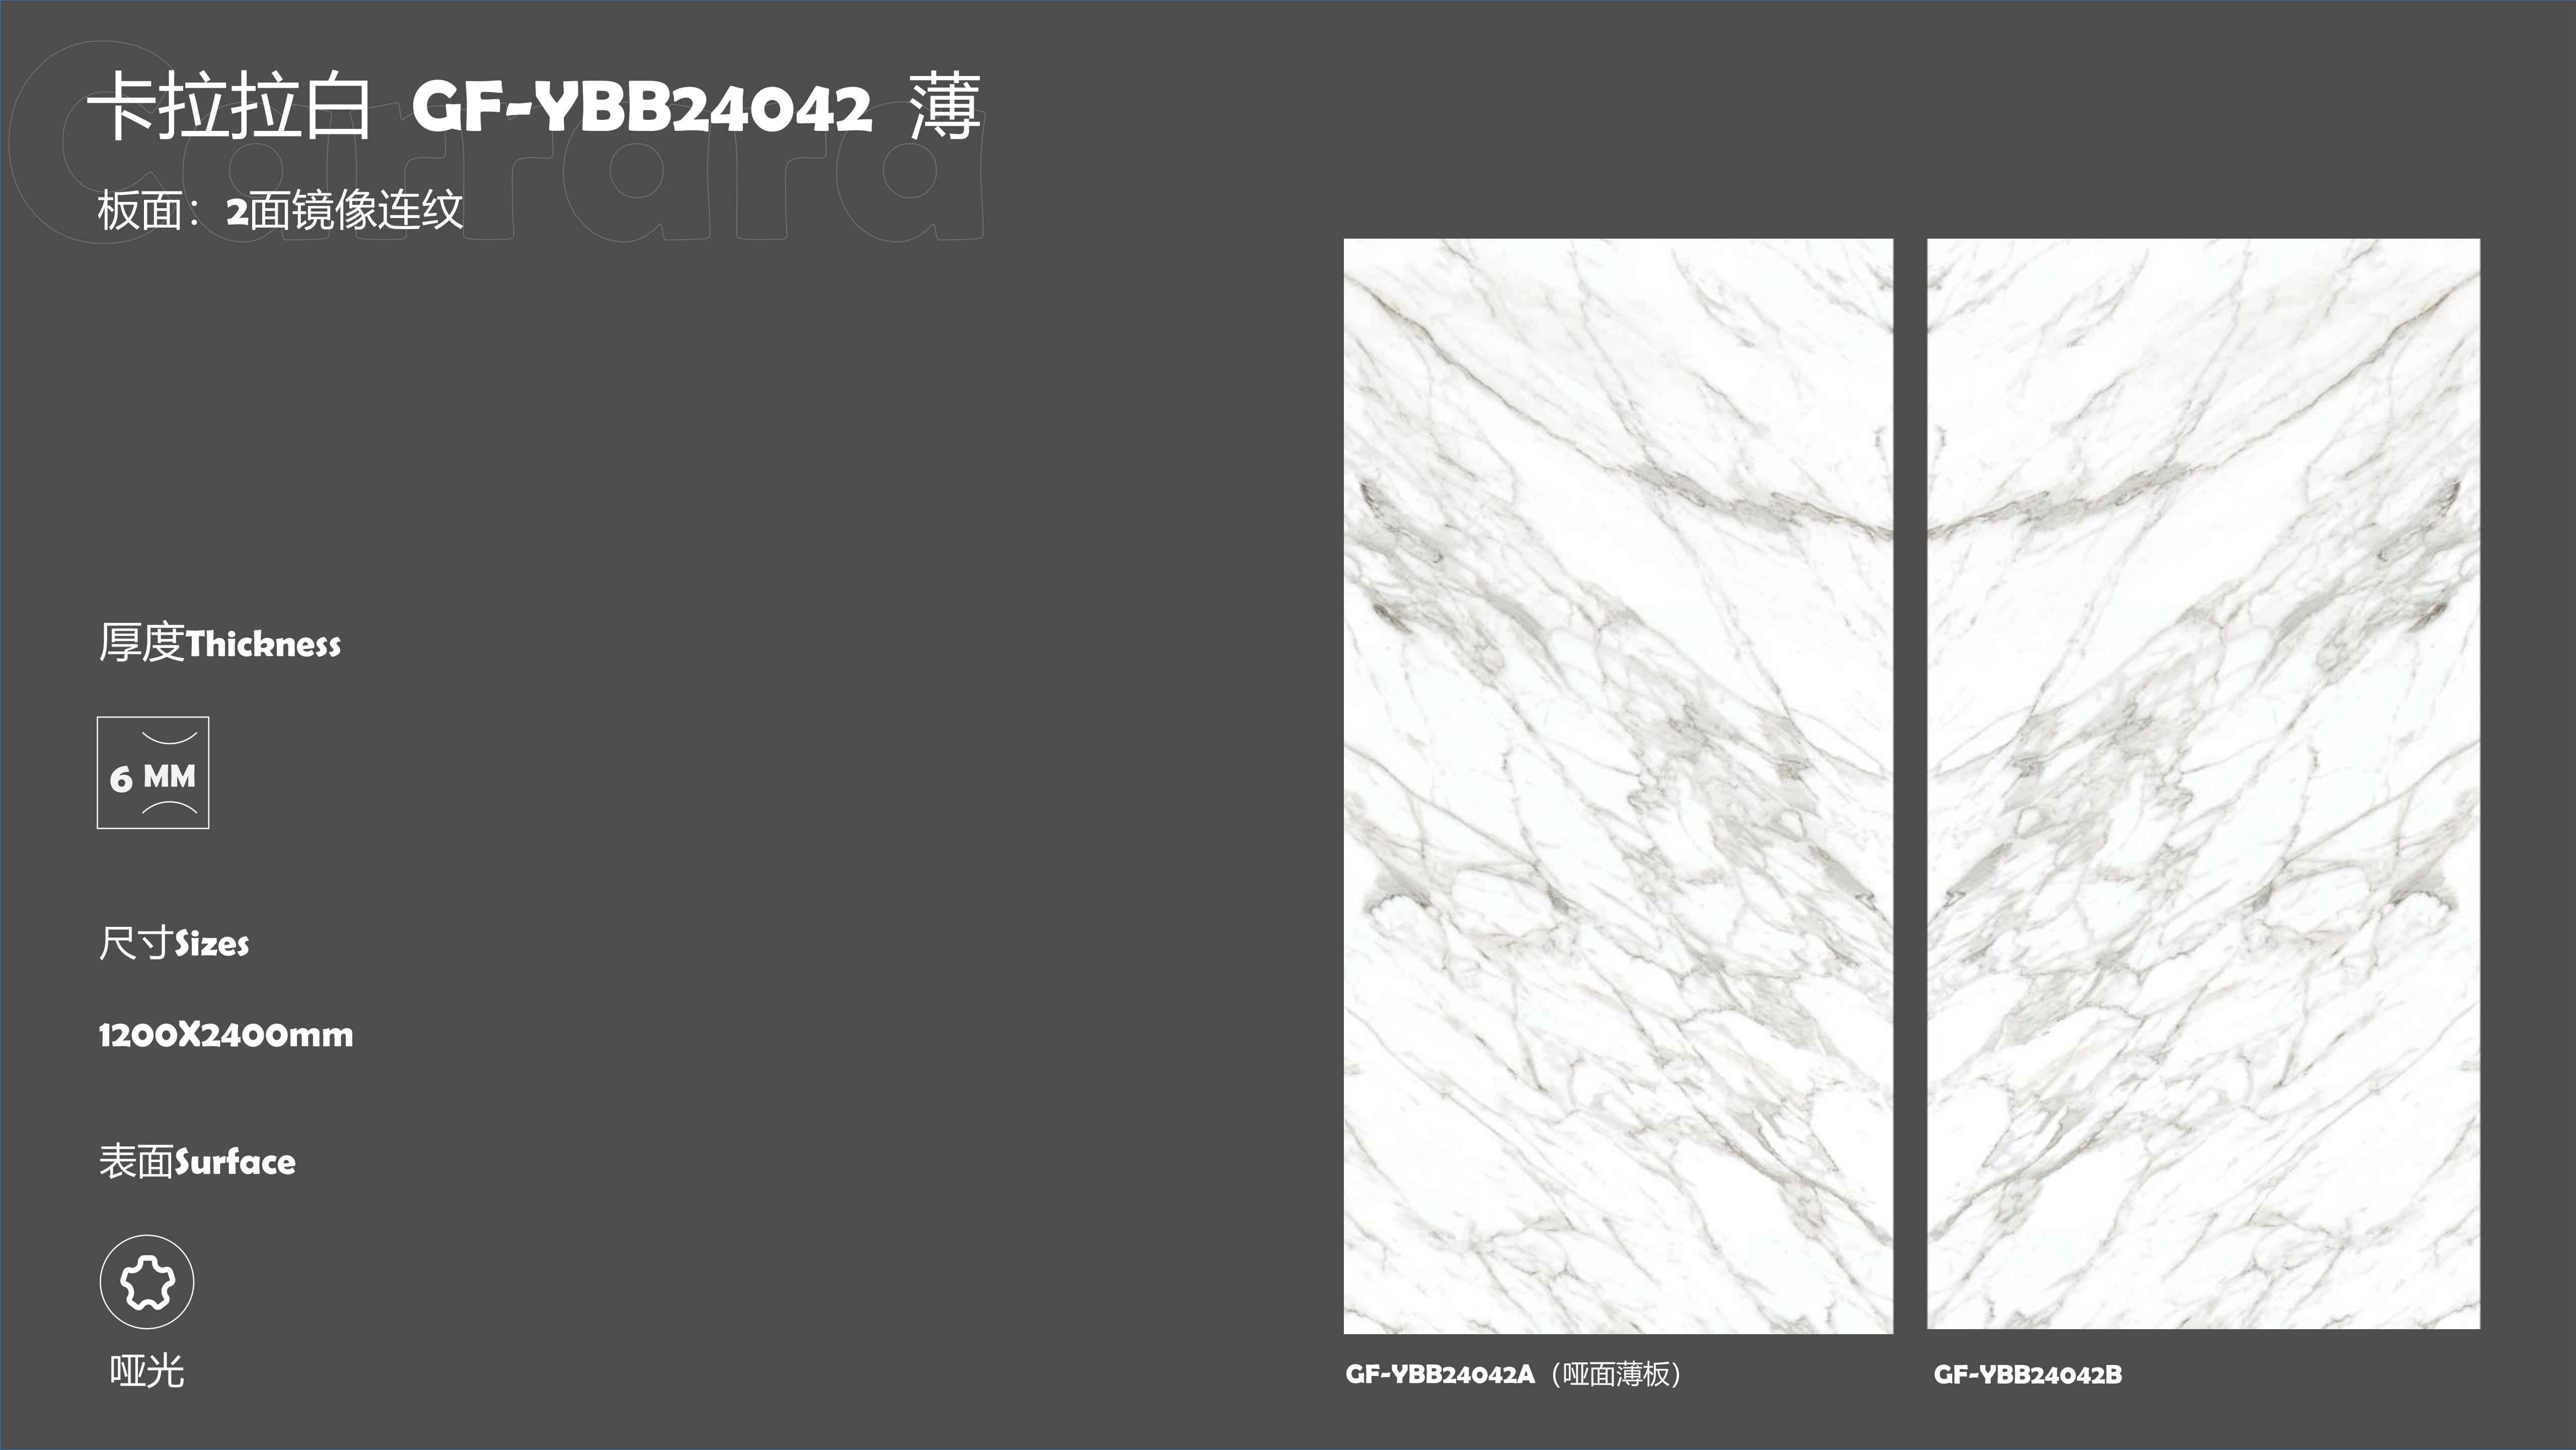 Carrara White Book Passende Porzellanplatten 2400x1200x6mm
